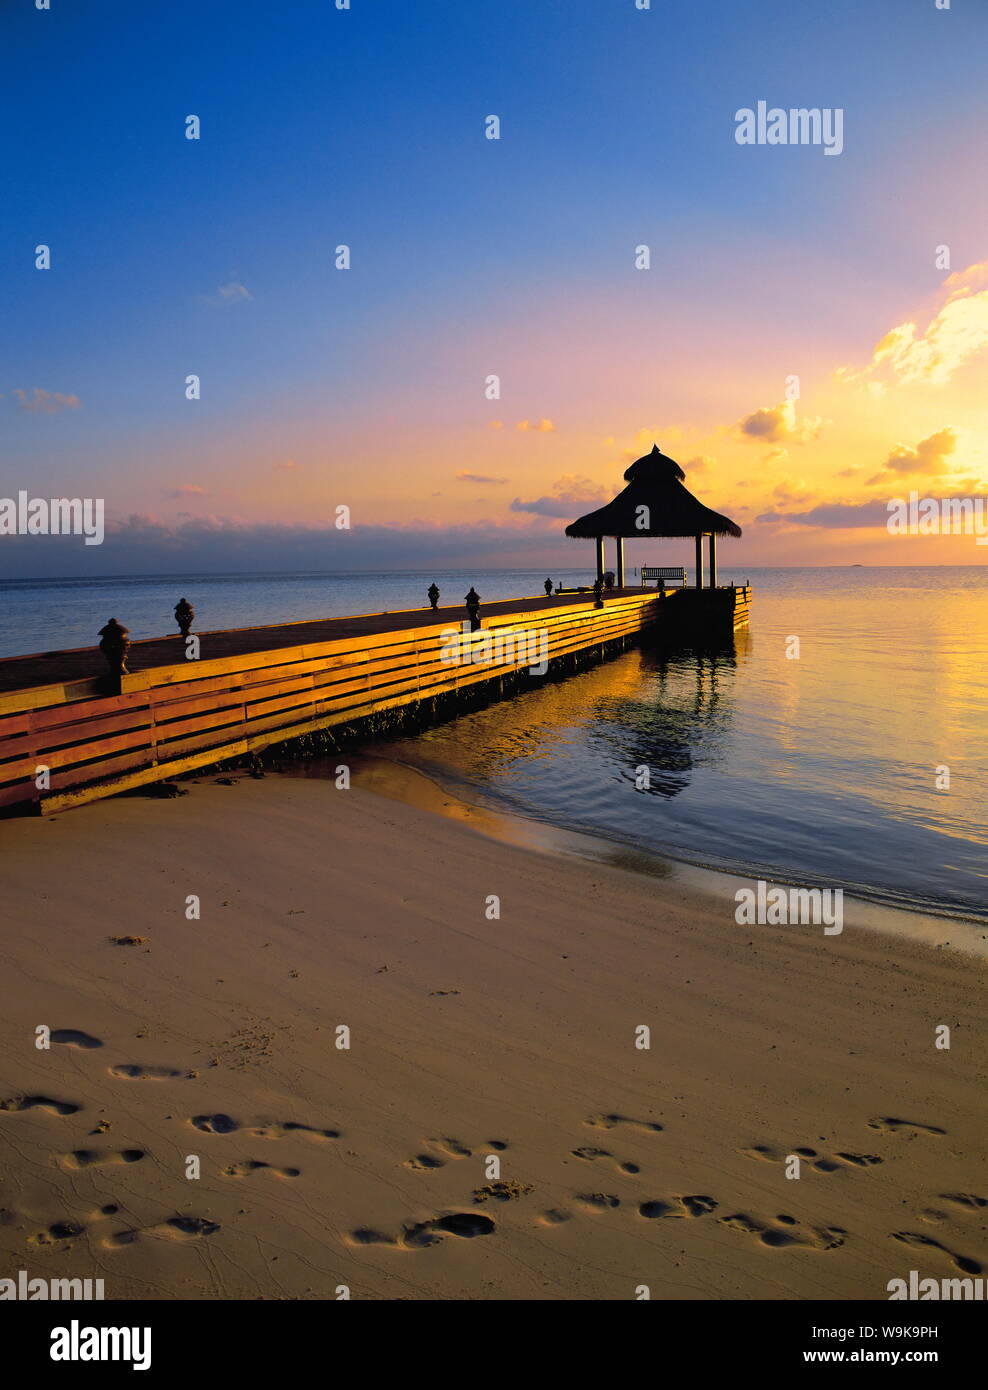 Steg am Strand bei Sonnenuntergang, Malediven, Indischer Ozean, Asien Stockfoto